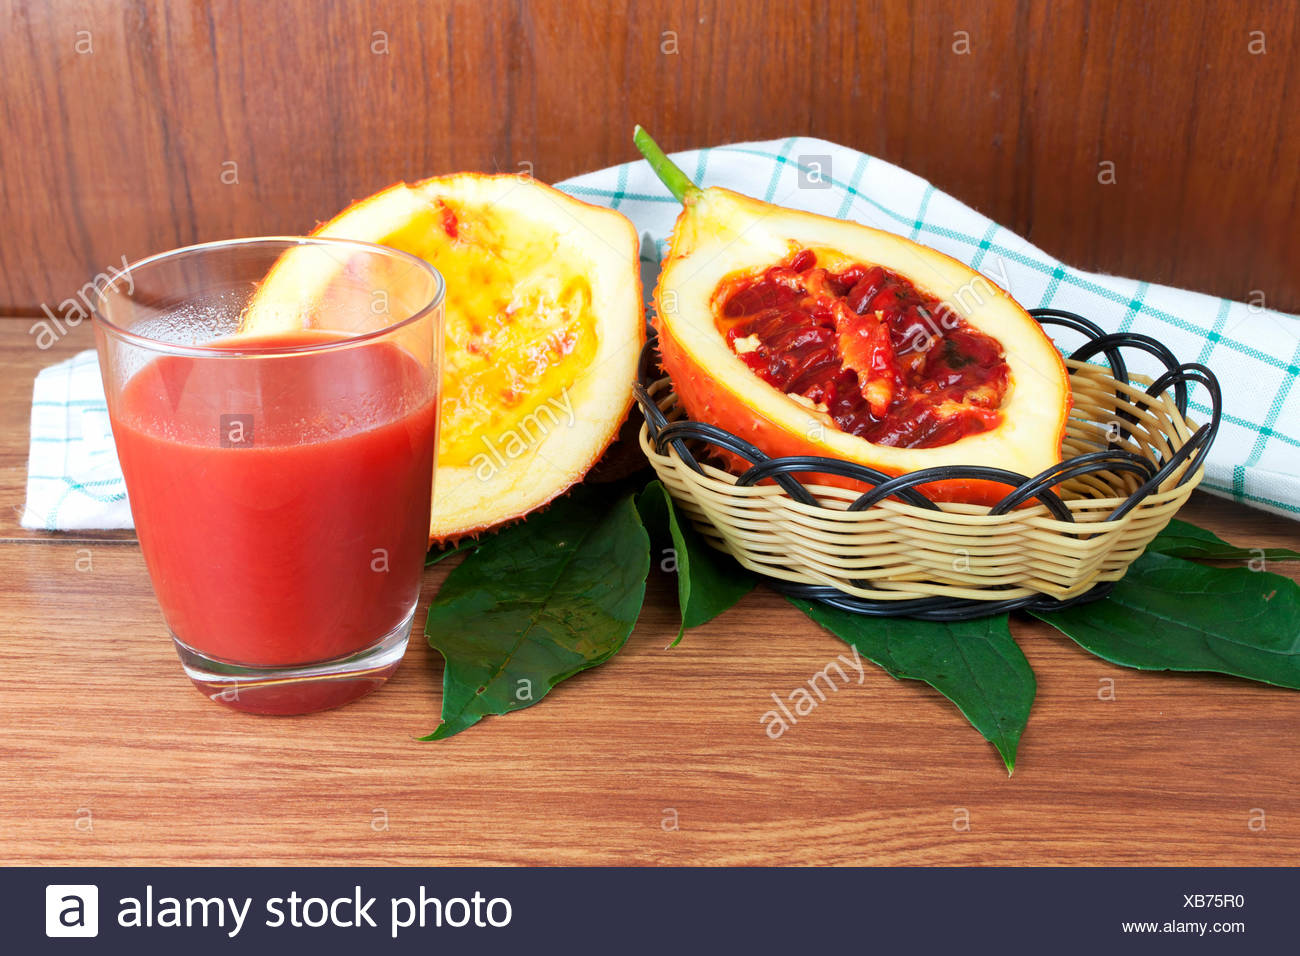 Baby Jack fruit and juice Stock Photo: 282285332 - Alamy